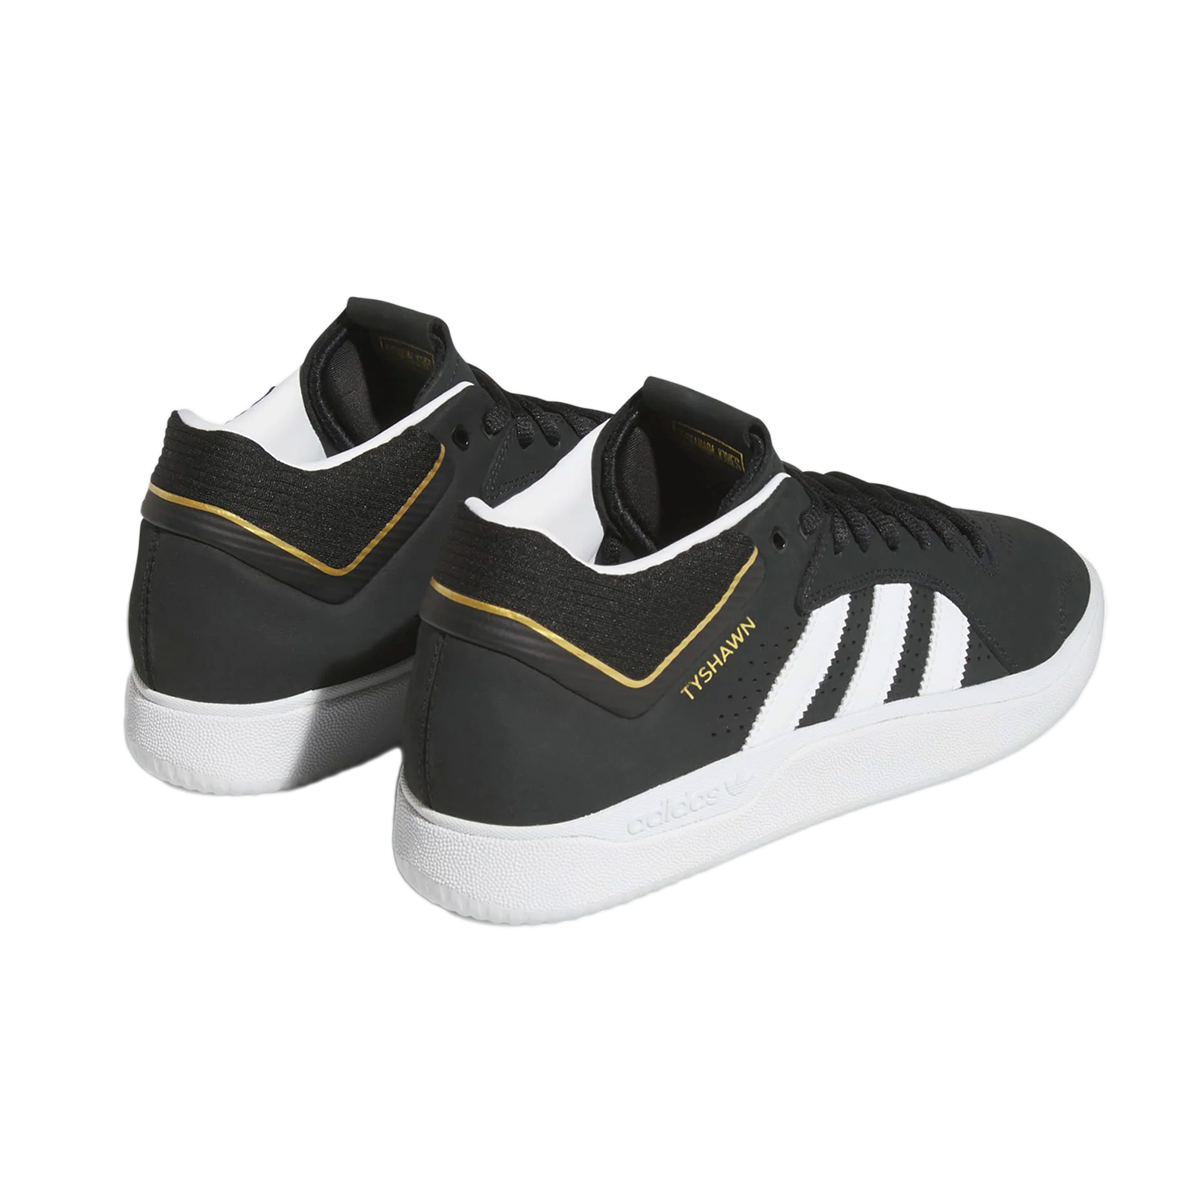 Adidas Tyshawn Shoes - Black/White Nubuck